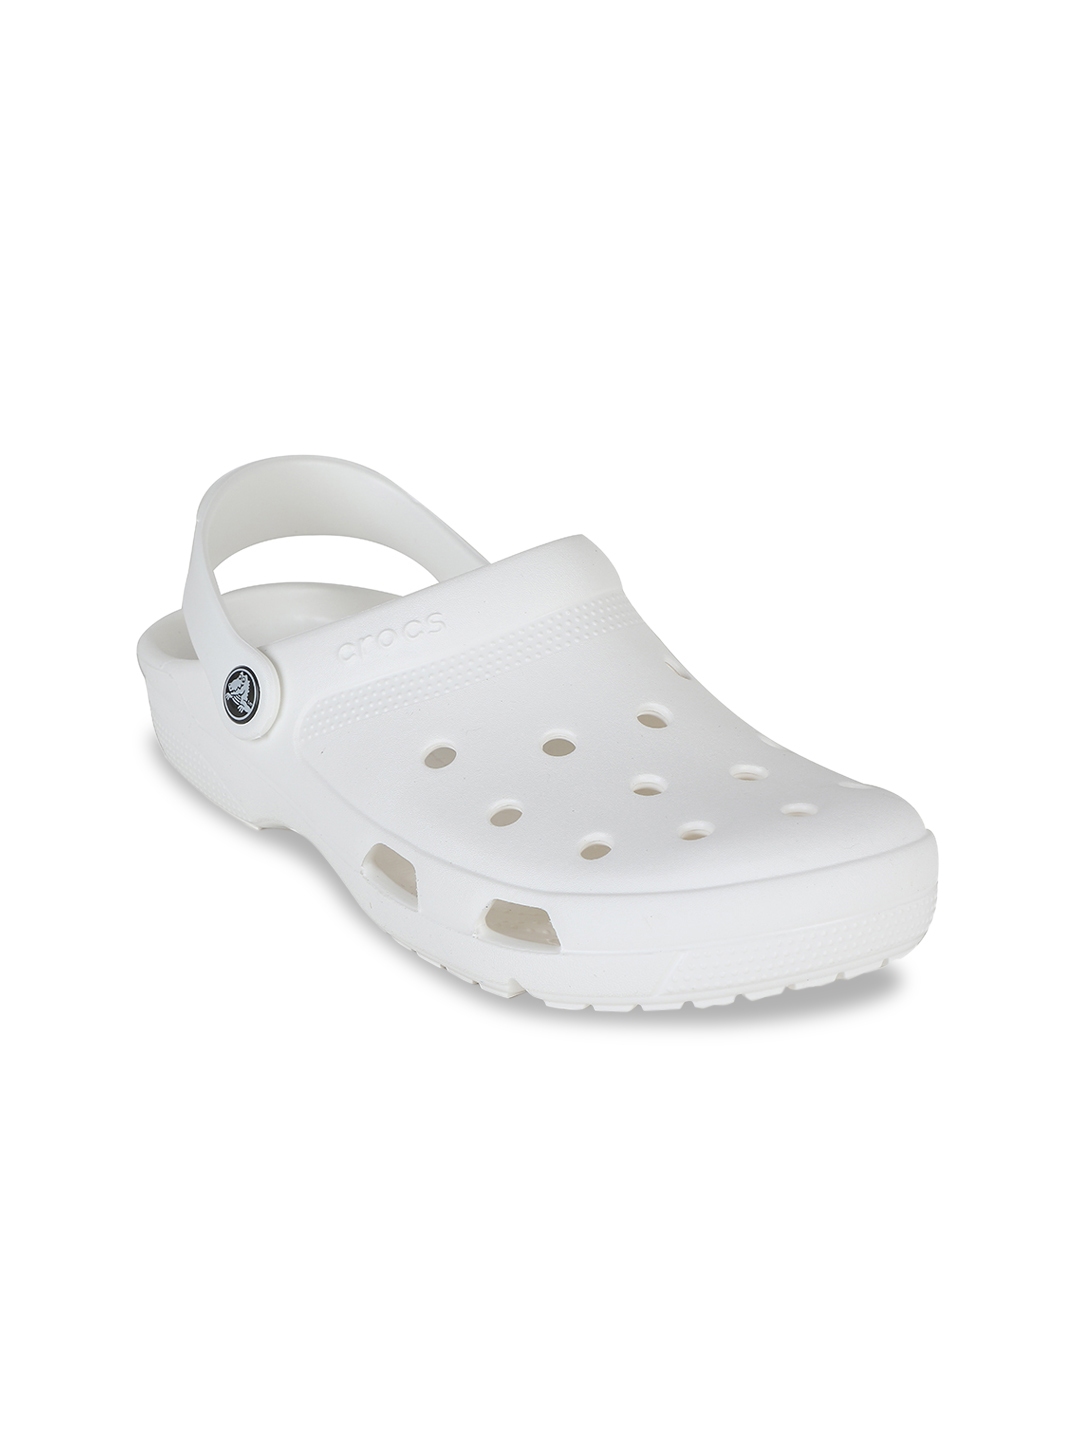 Crocs Women White Sandals - Flip Flops 